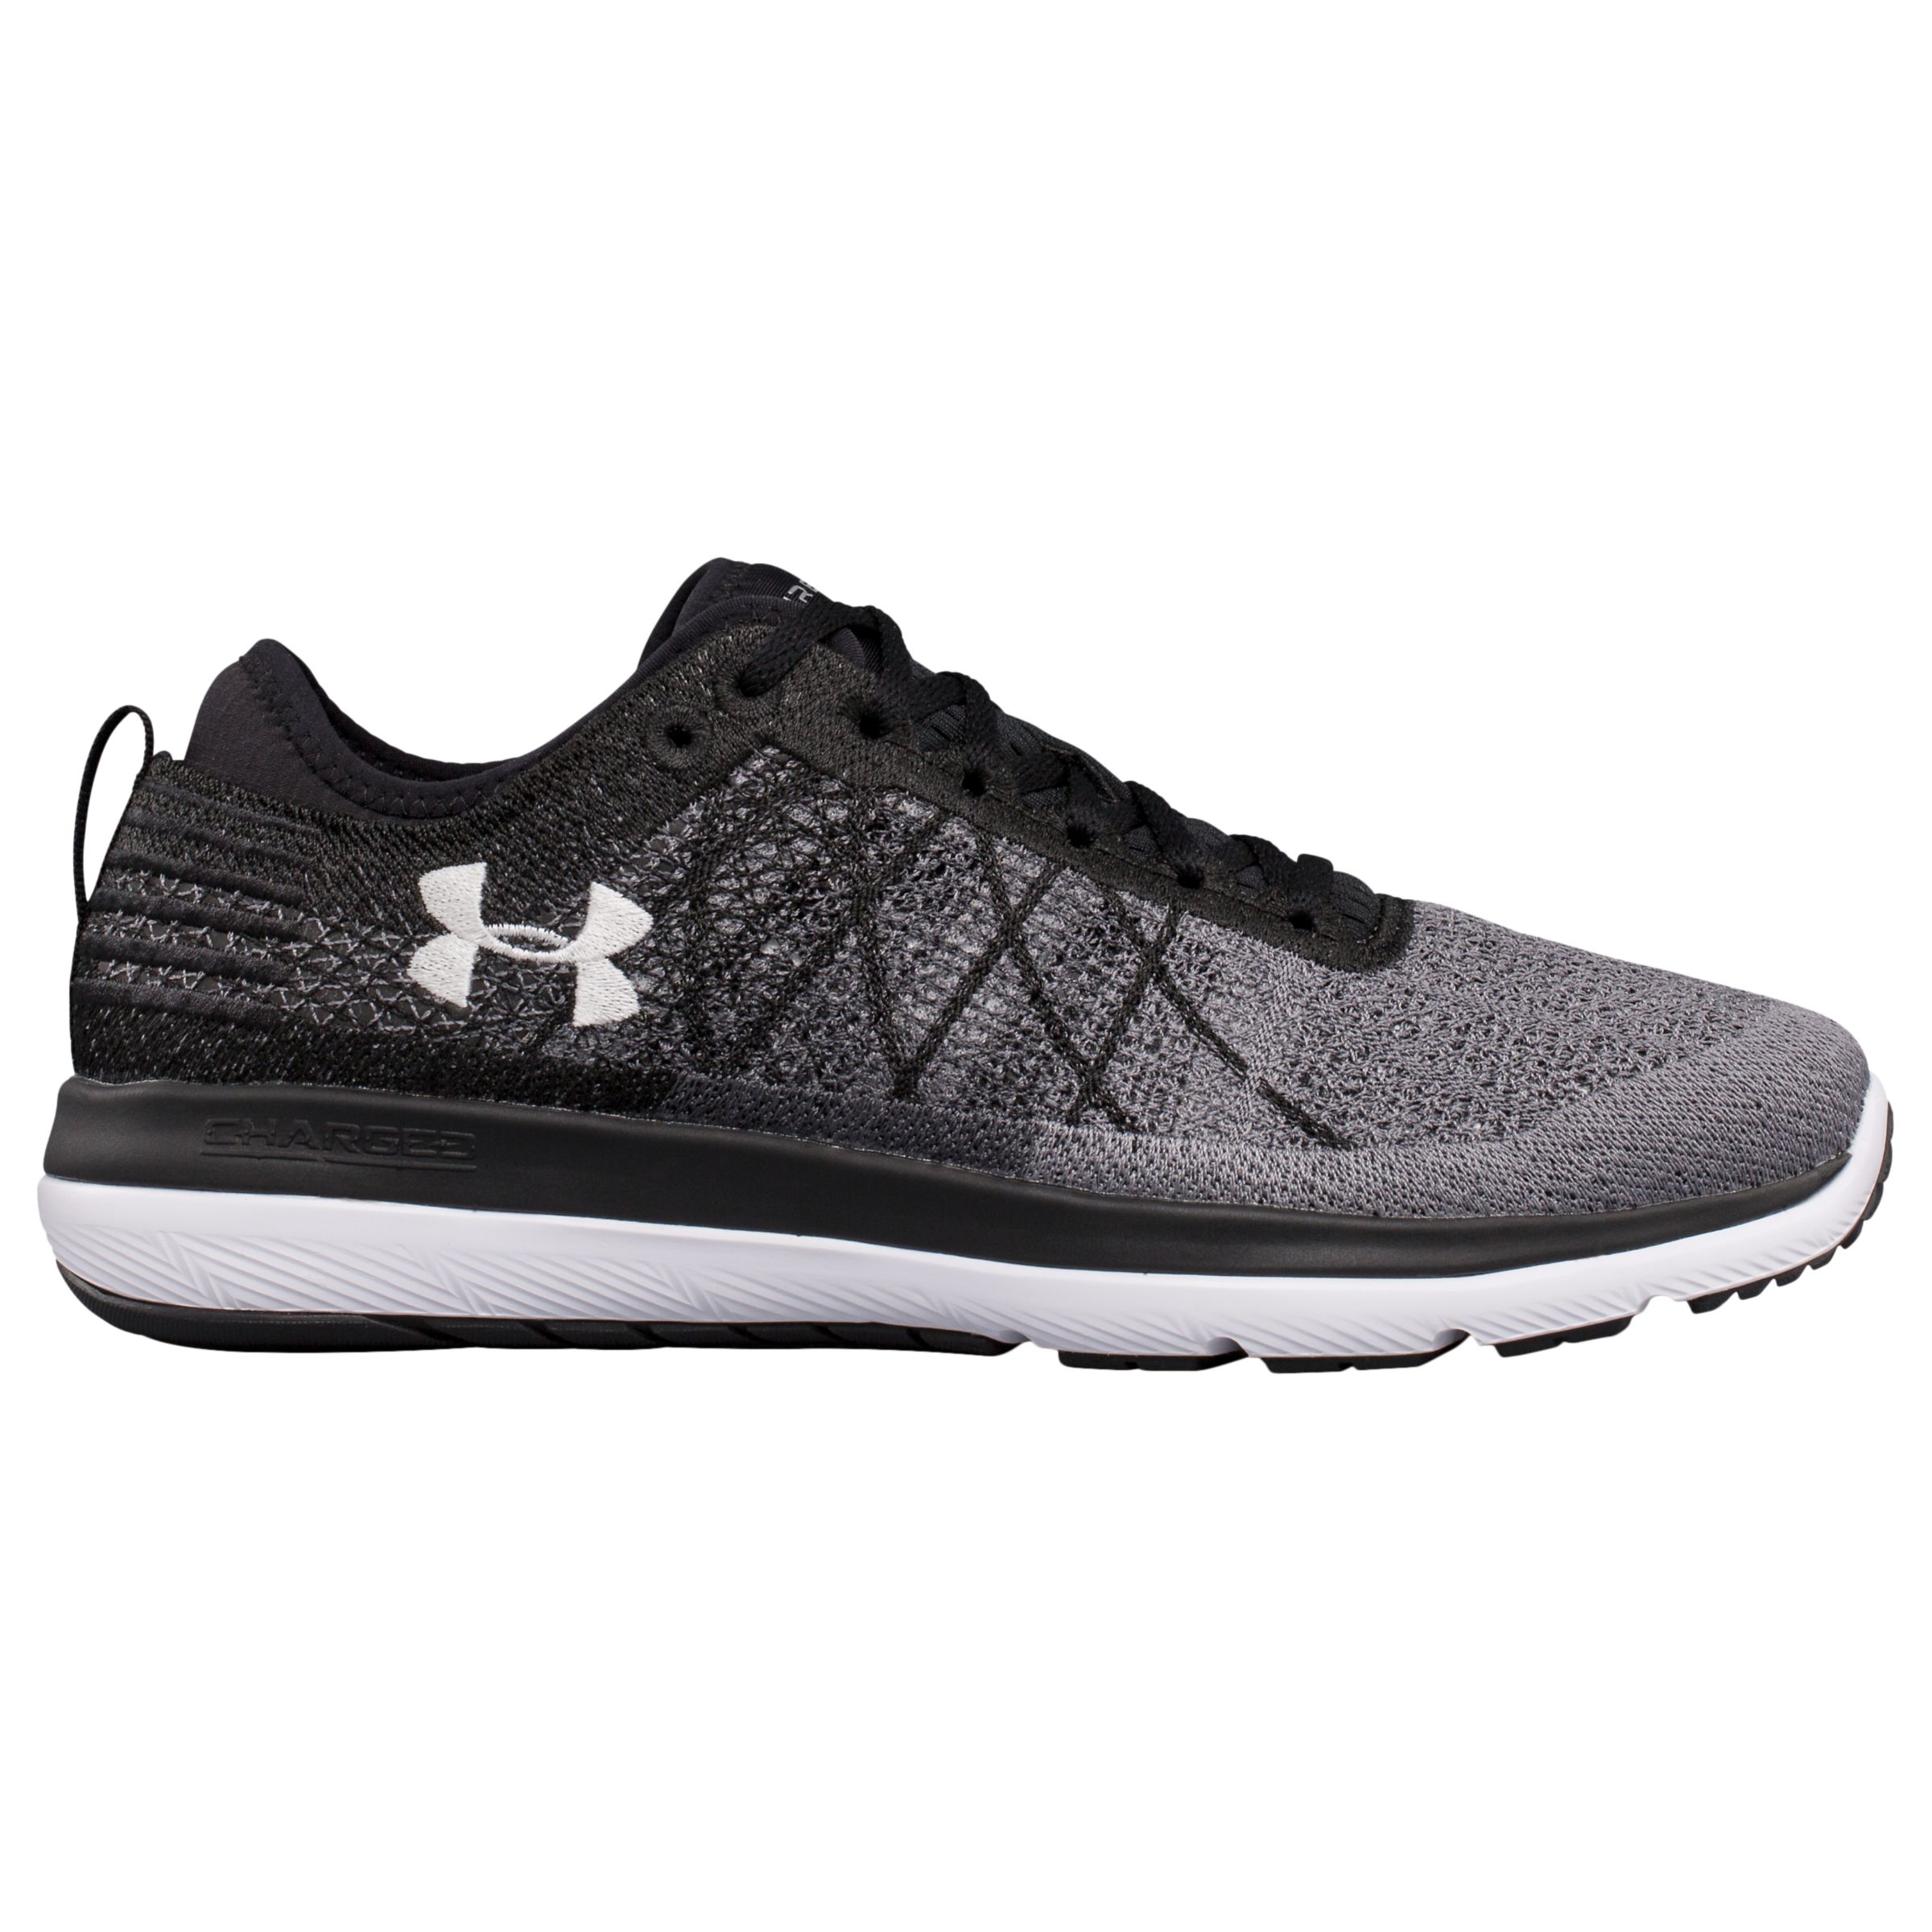 Under Armour SpeedForm Fortis 3 Men's Running Shoes, Black/Grey/White, 9